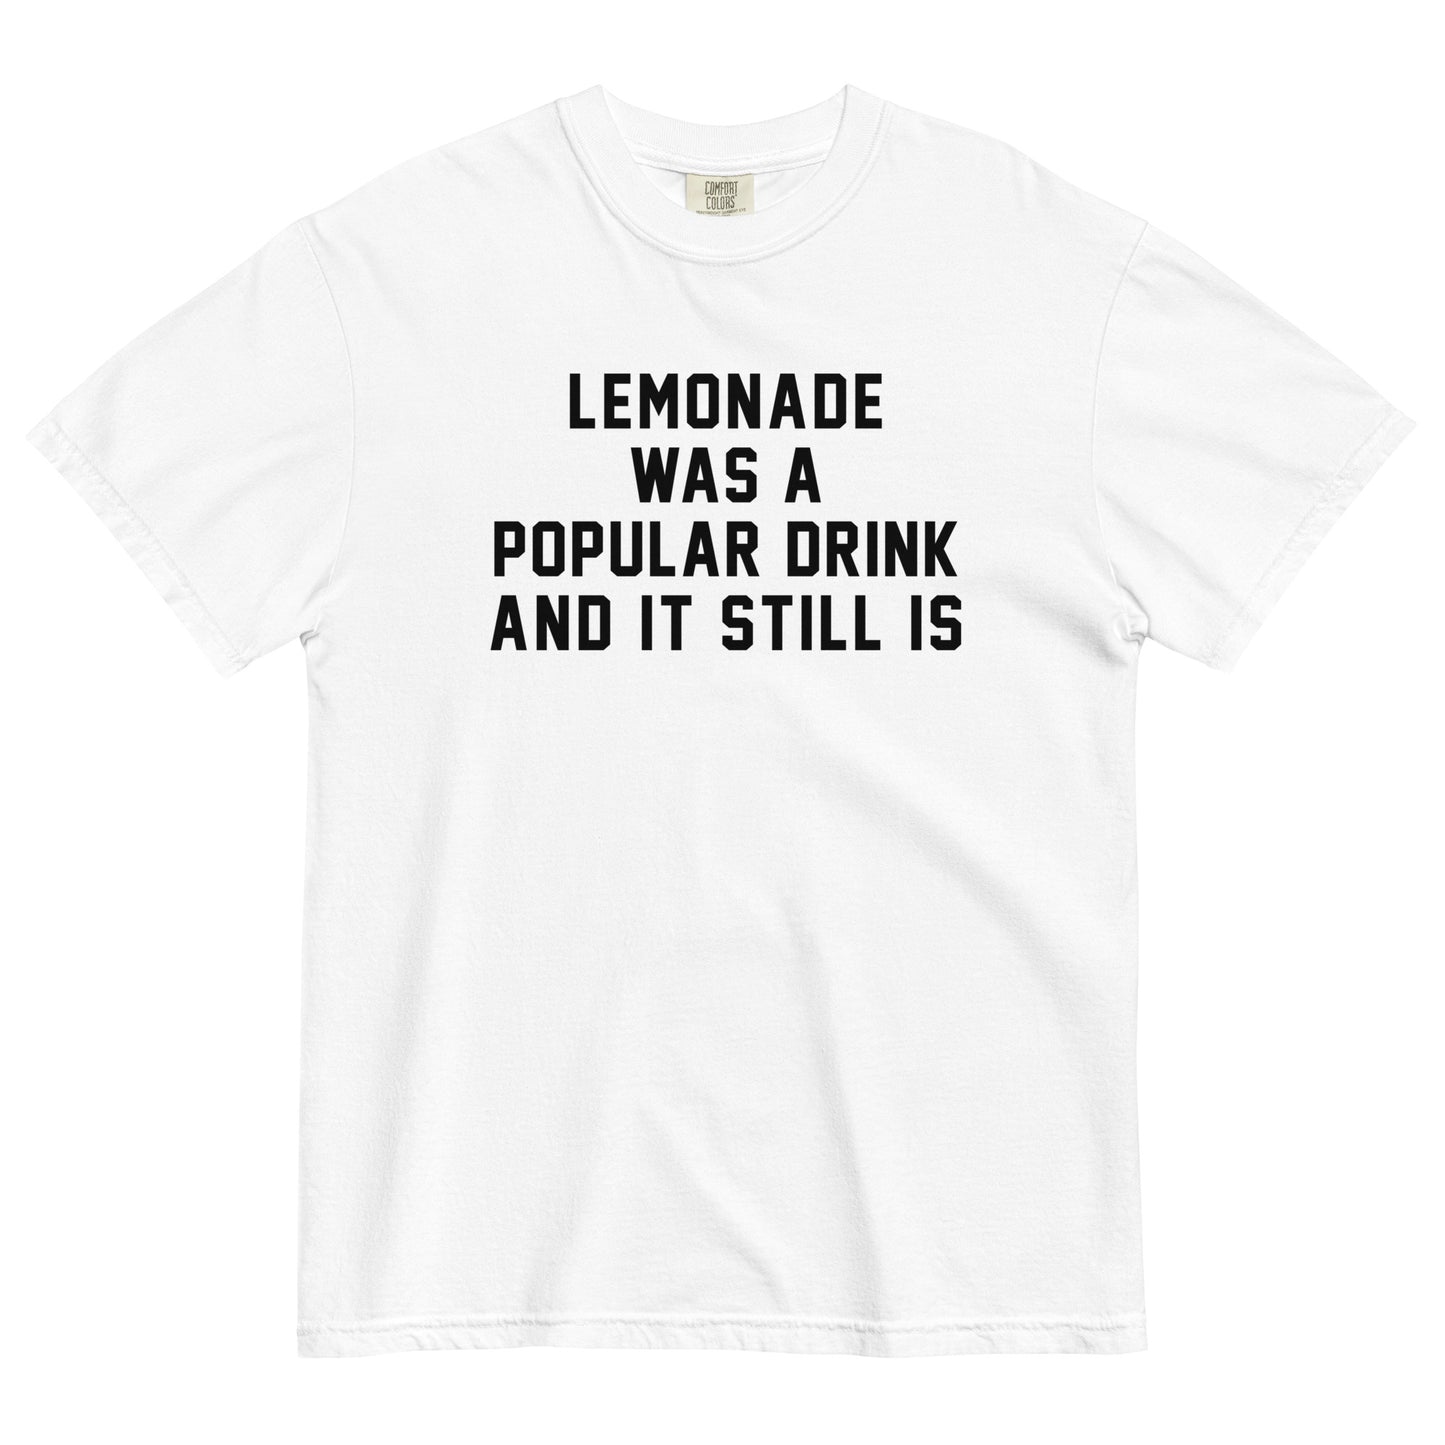 LEMONADE WAS A POPULAR DRINK AND IT STILL IS